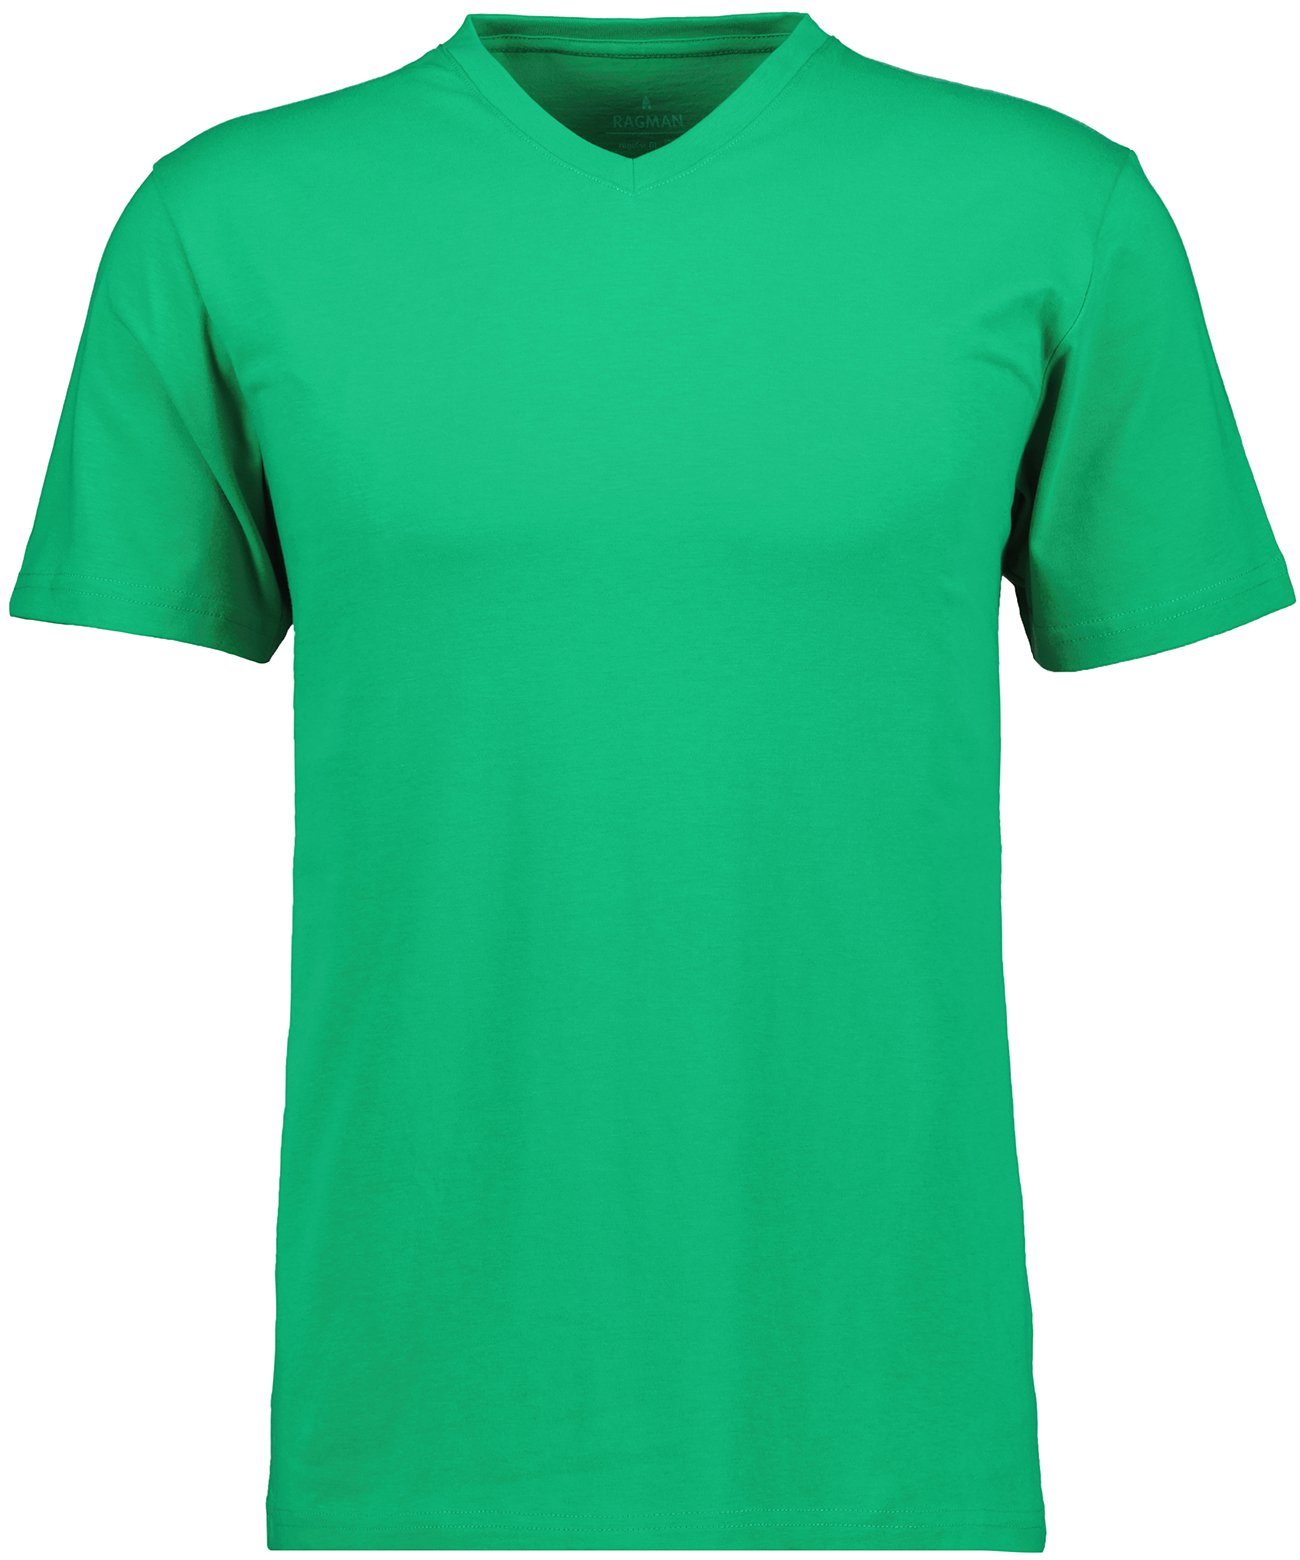 RAGMAN T-Shirt Electric Green-394